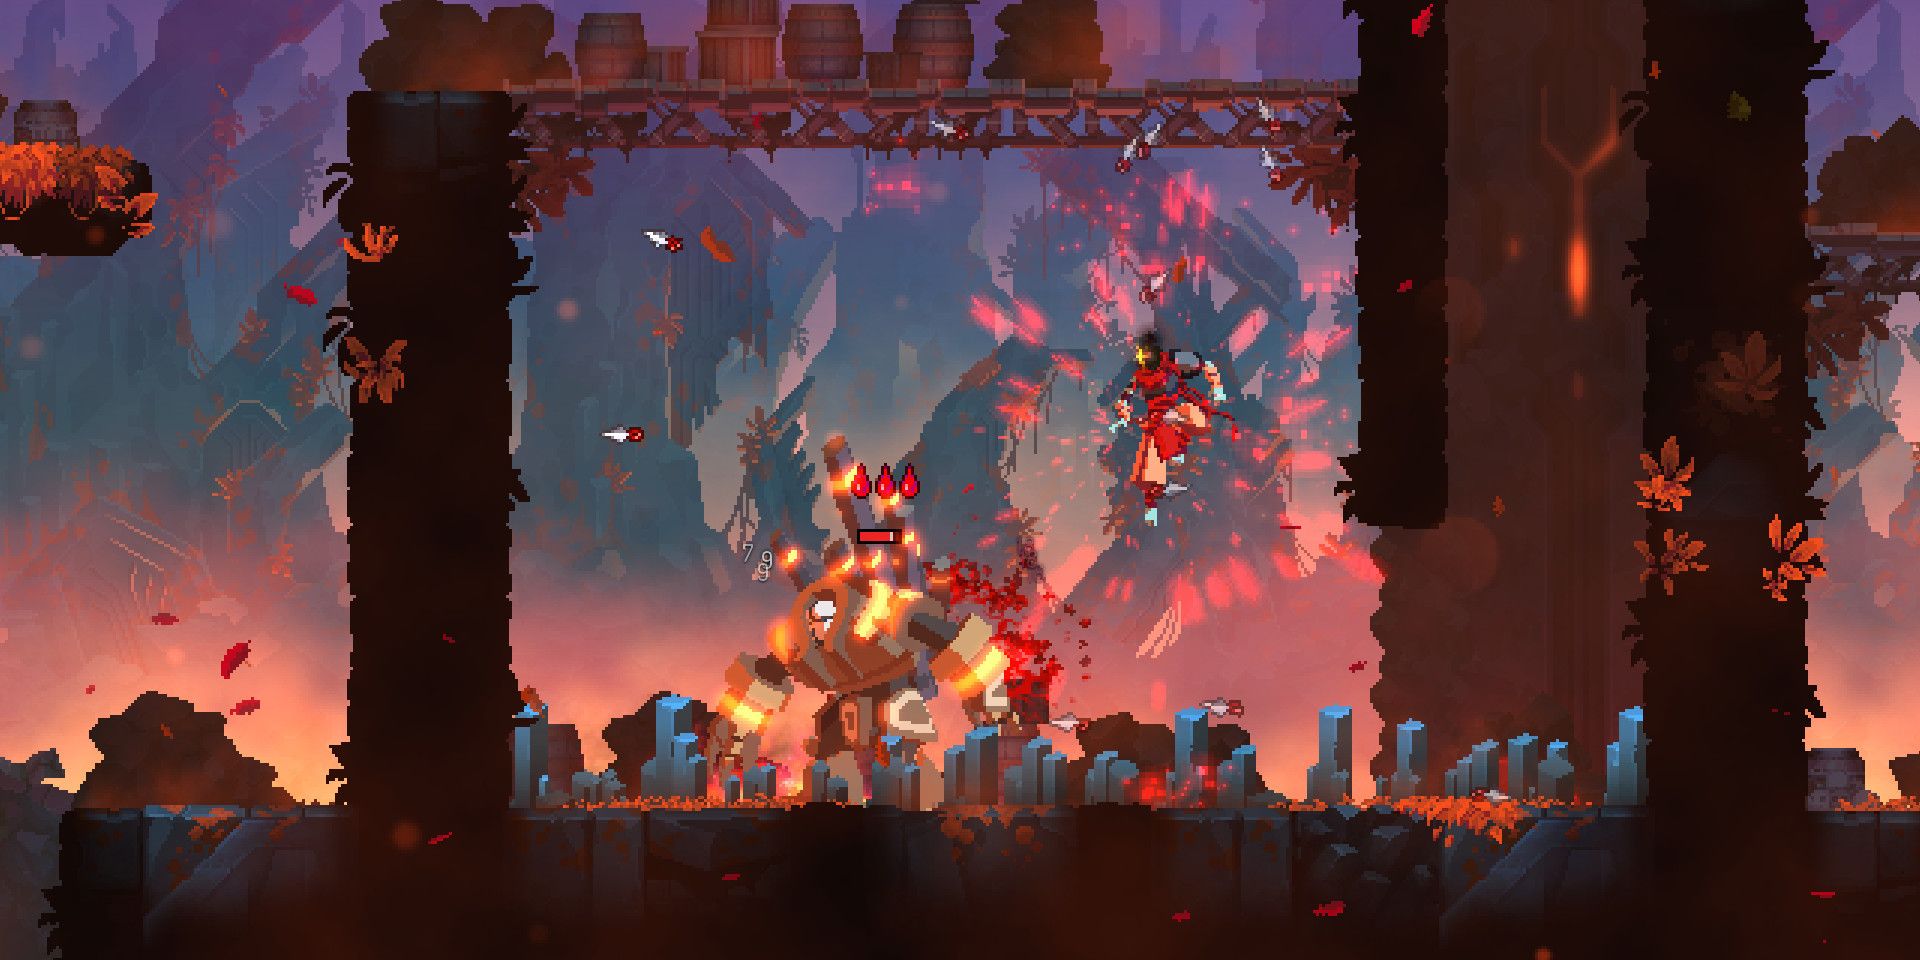 A screenshot shows combat in Dead Cells